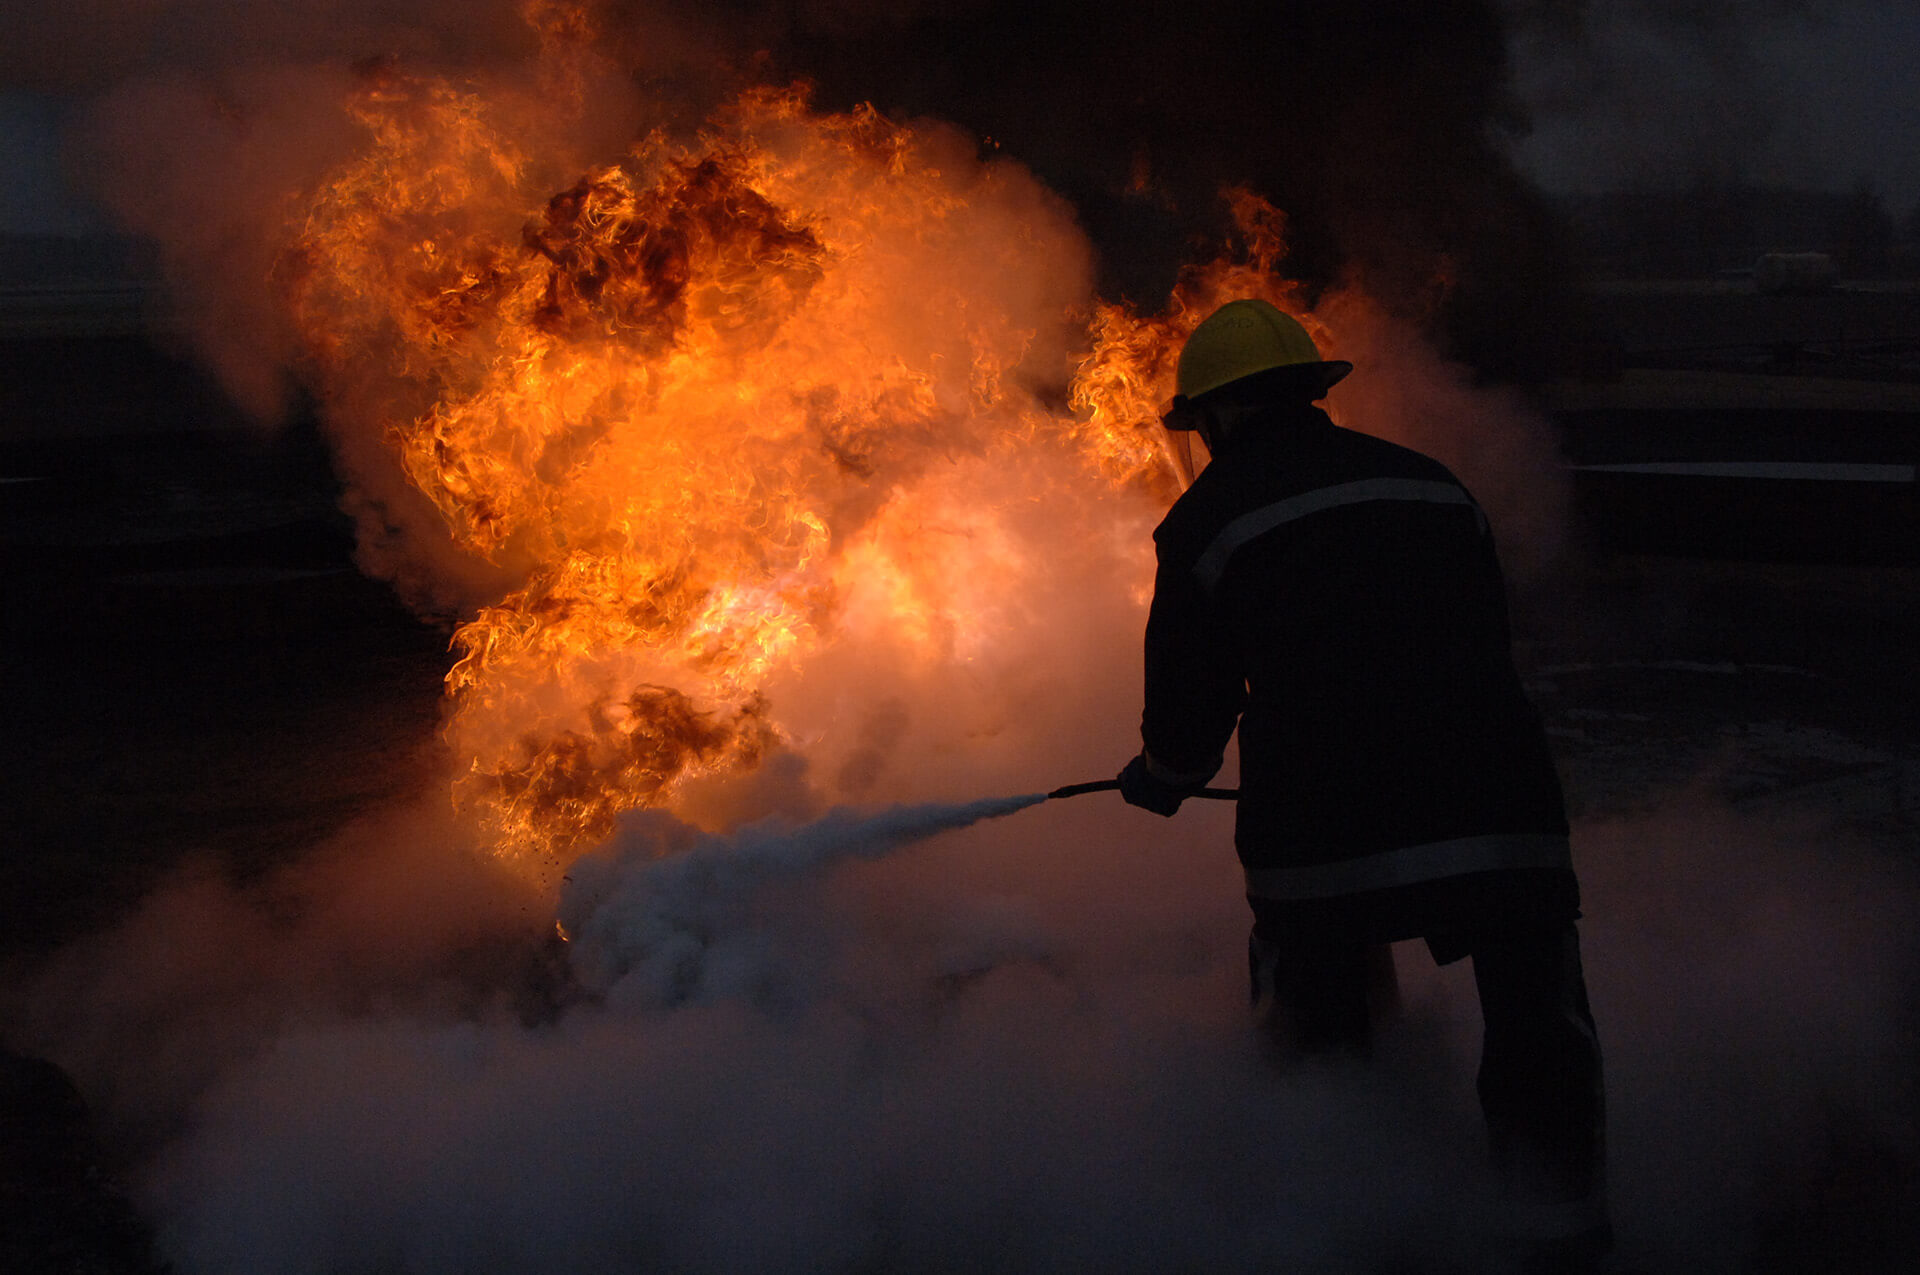 Firefighter dousing a fire with a fire hose